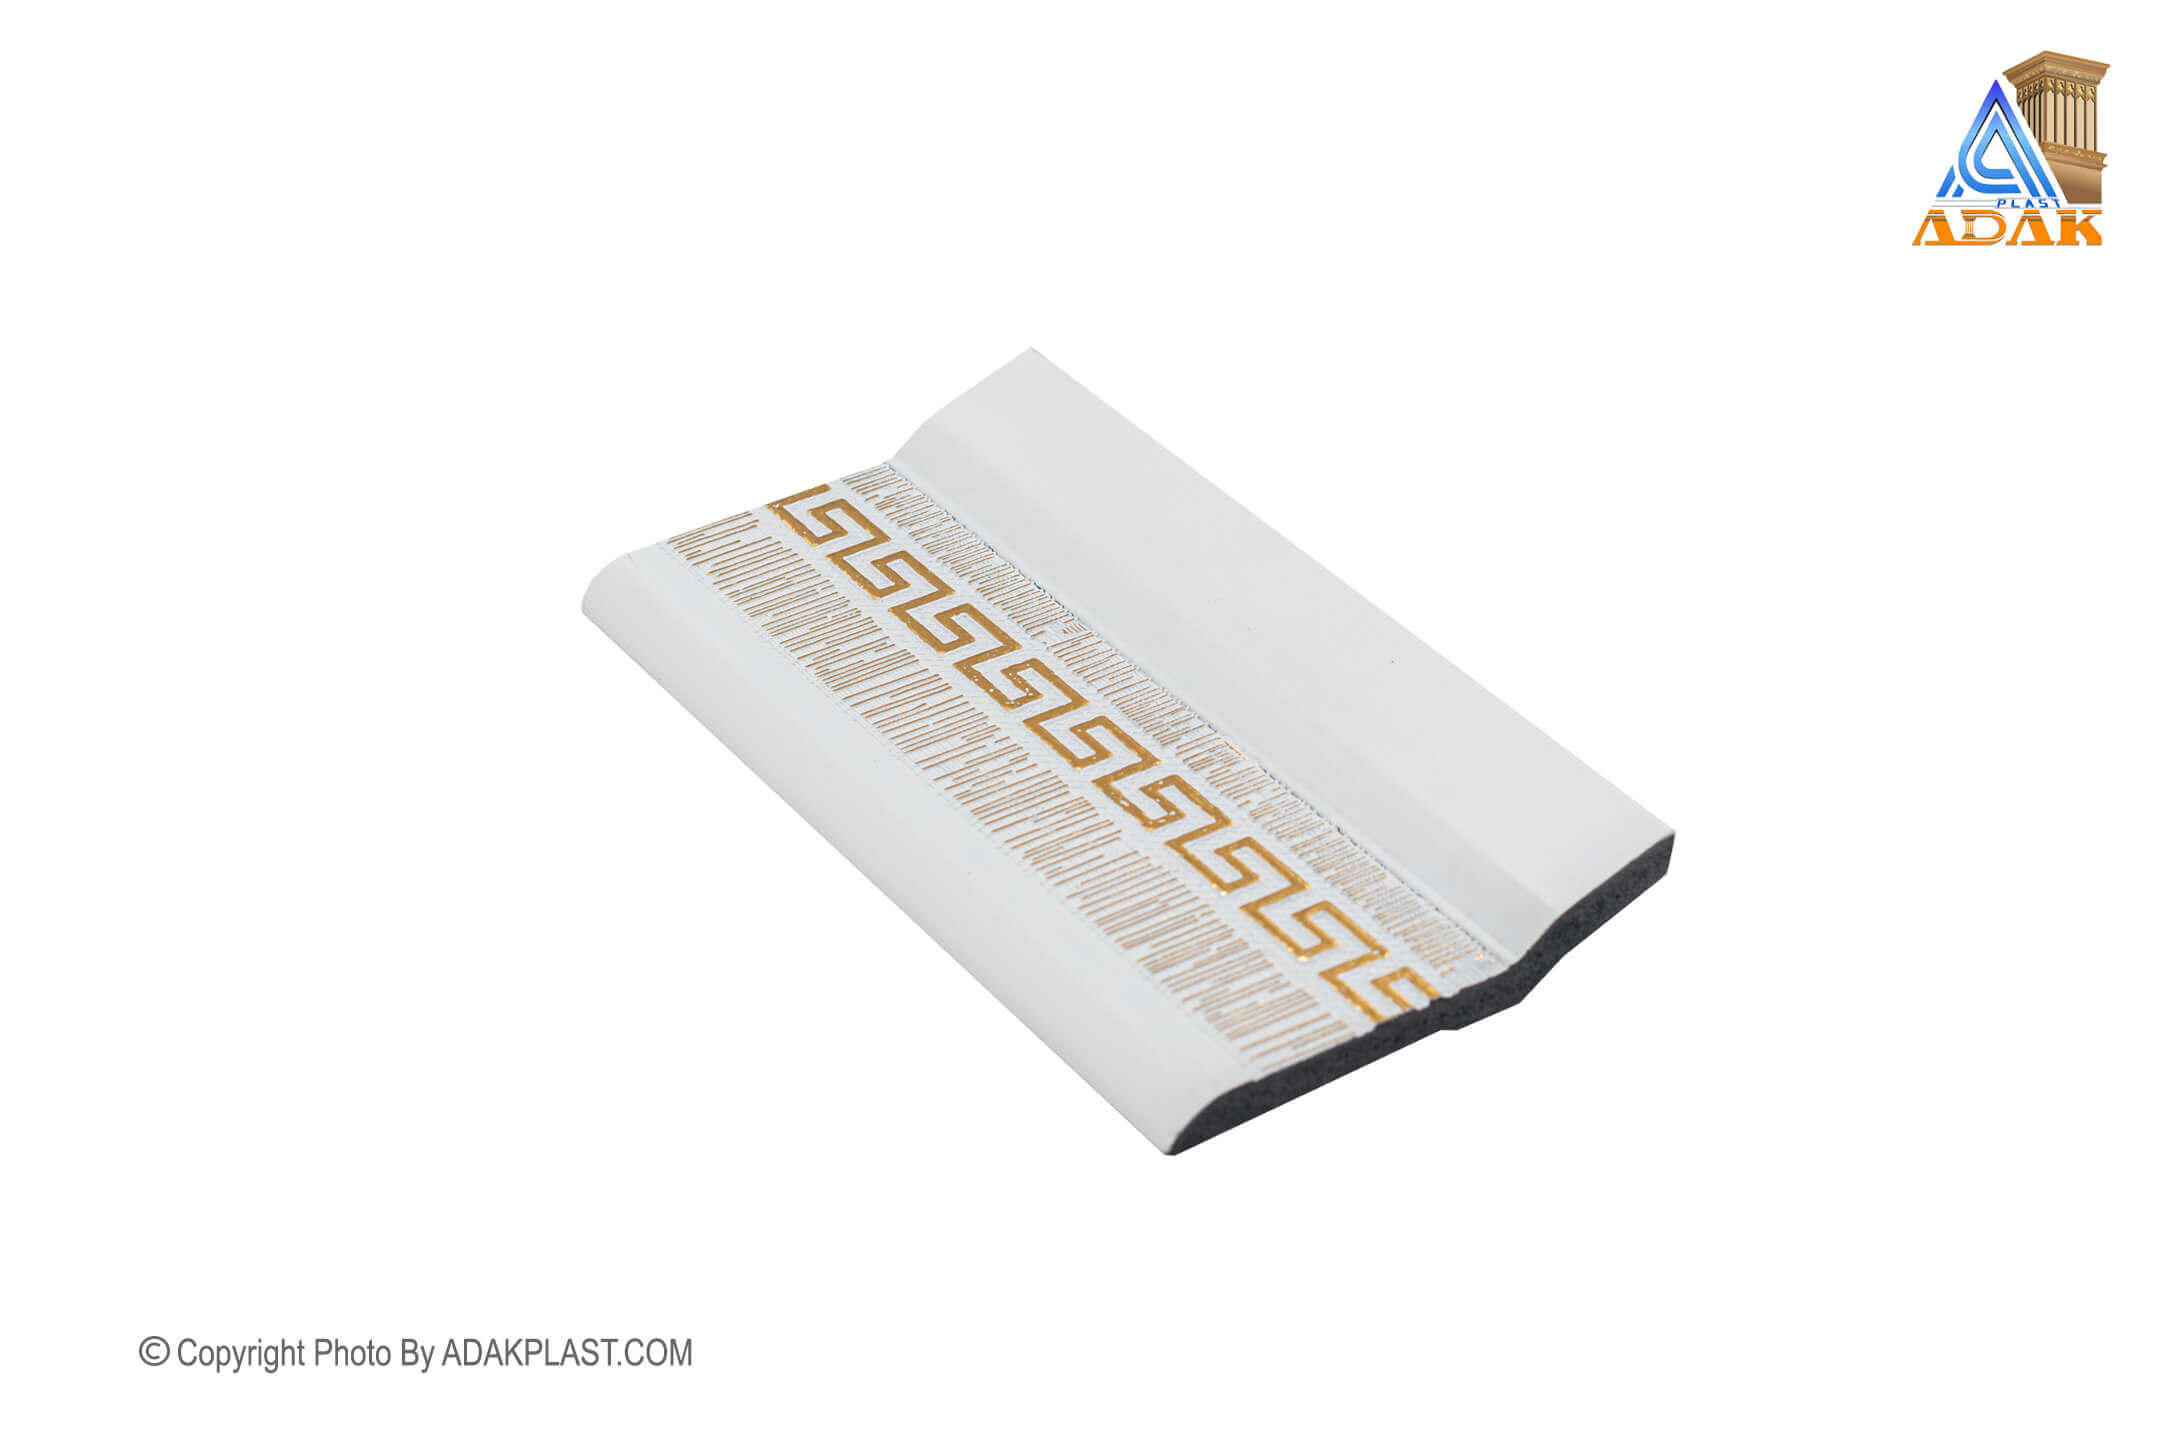 AD860-WVT - 8 cm skirting board - 8 cm skirting board with royal edge - white golden skirting board - royal white golden skirting board - PVC skirting board - modern skirting board - edged skirting board -